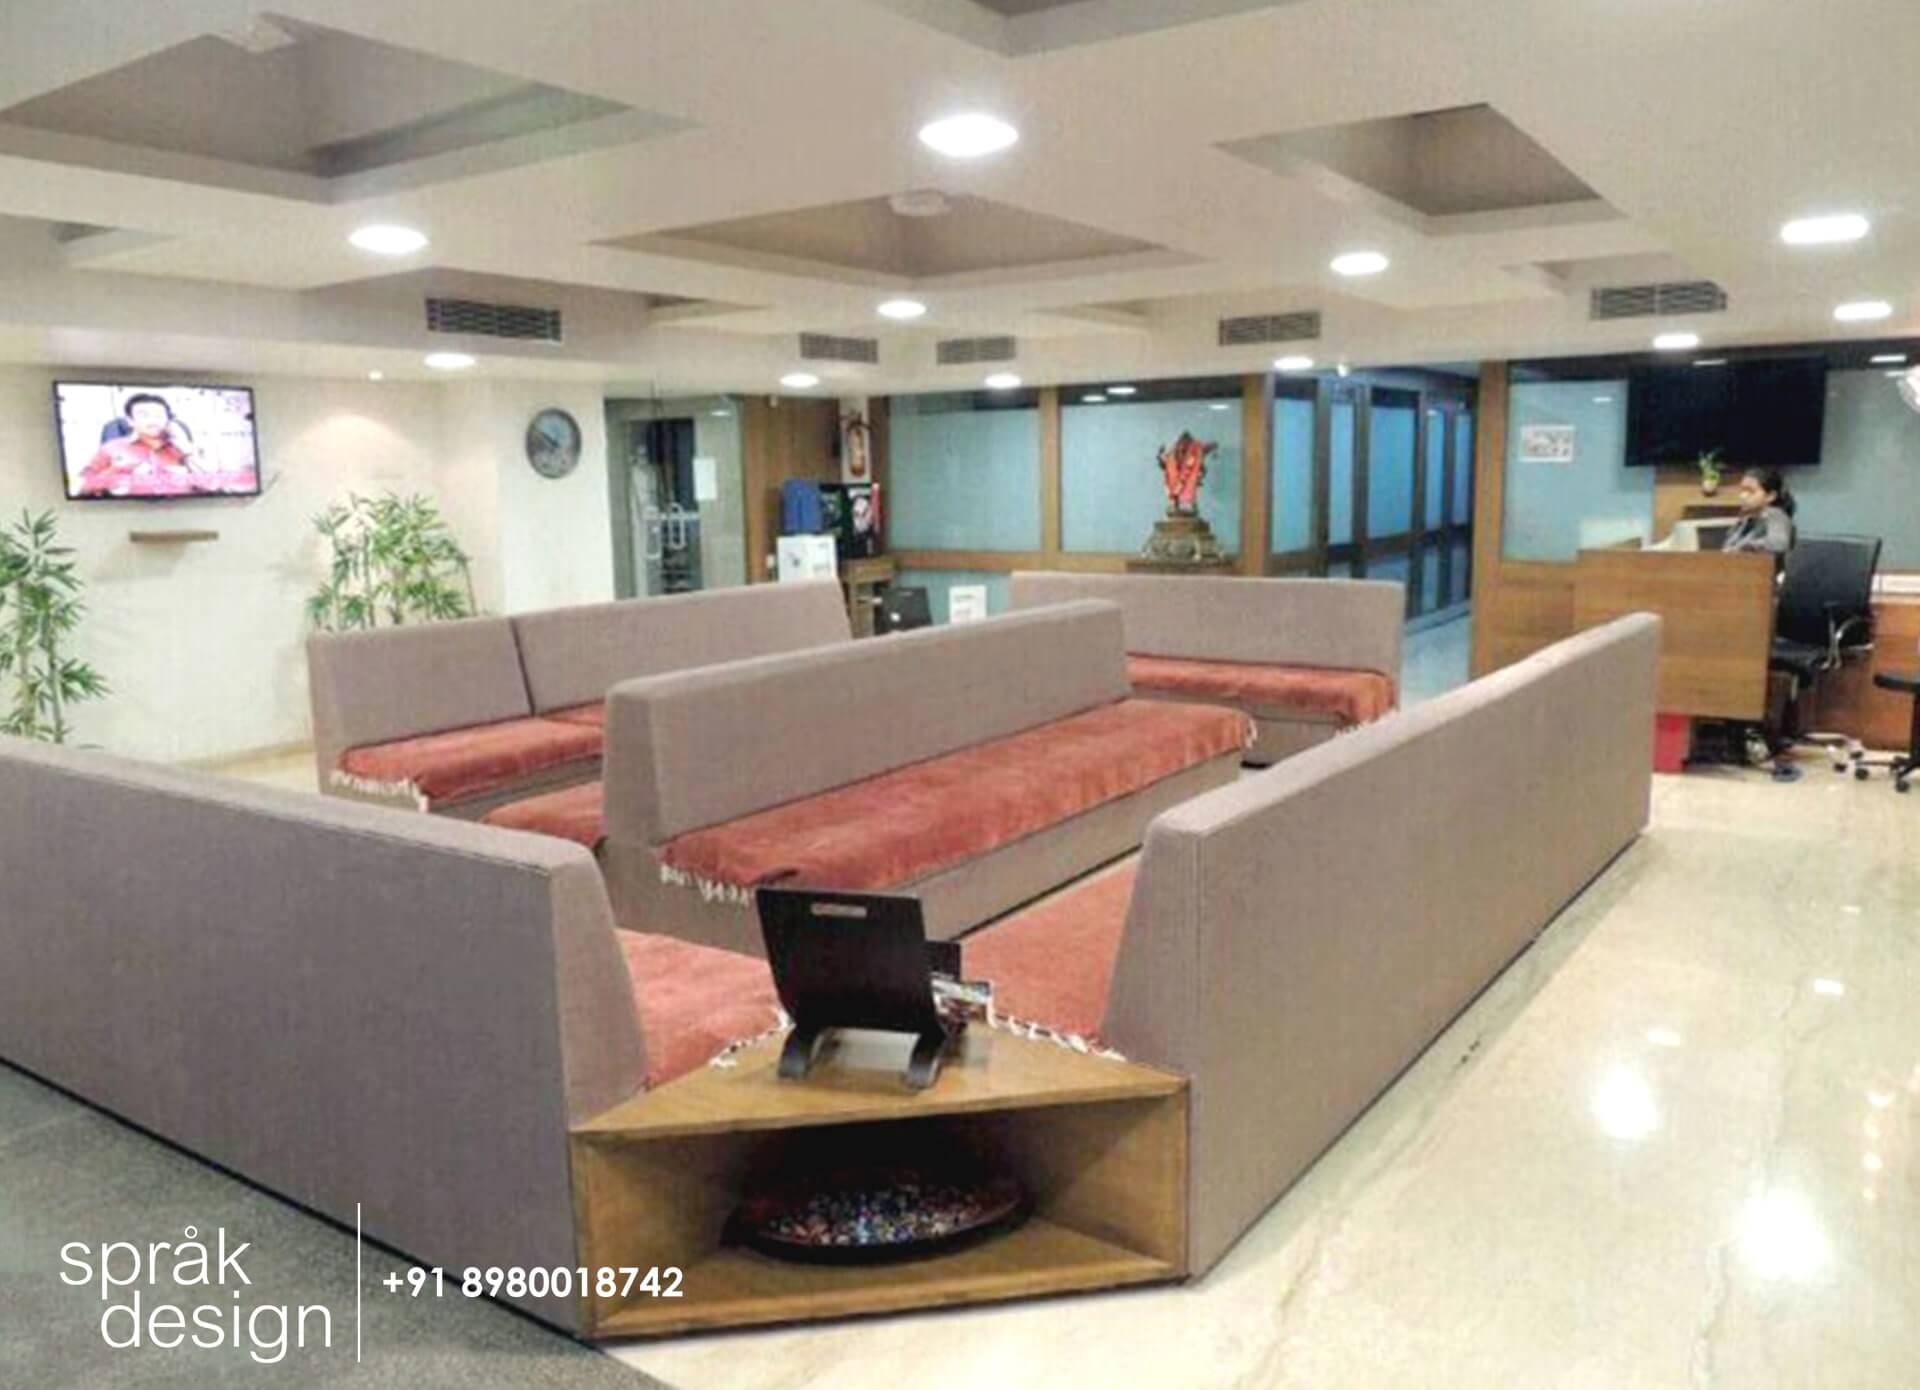 ved hospital interior design waiting seater 2